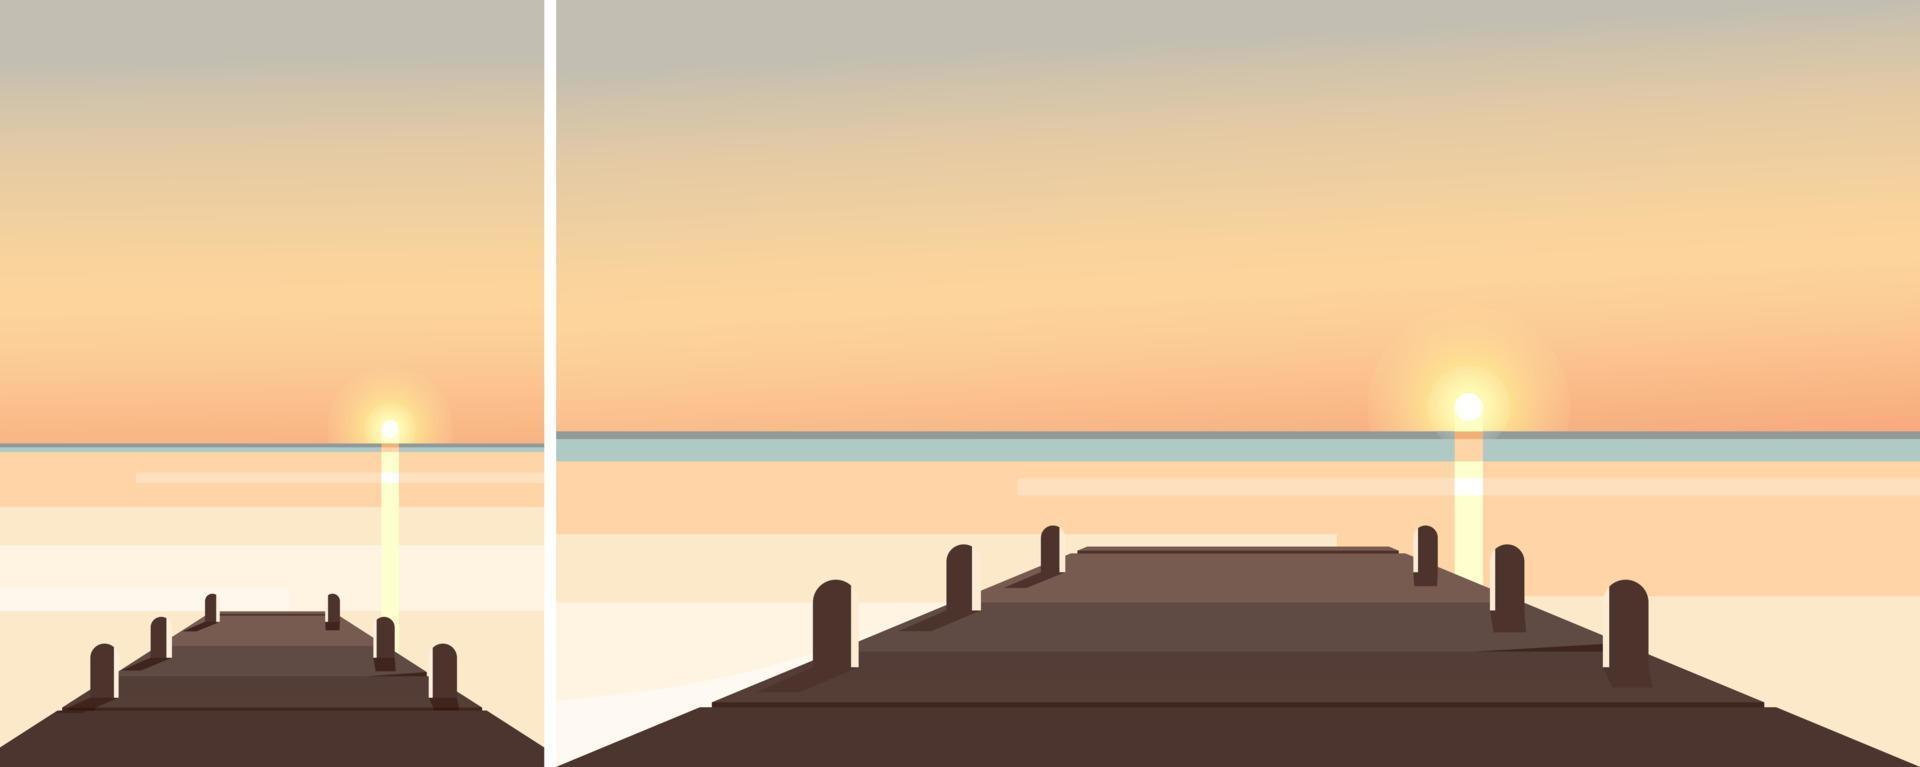 Seebrücke bei Sonnenuntergang. Naturlandschaften in verschiedenen Formaten. vektor